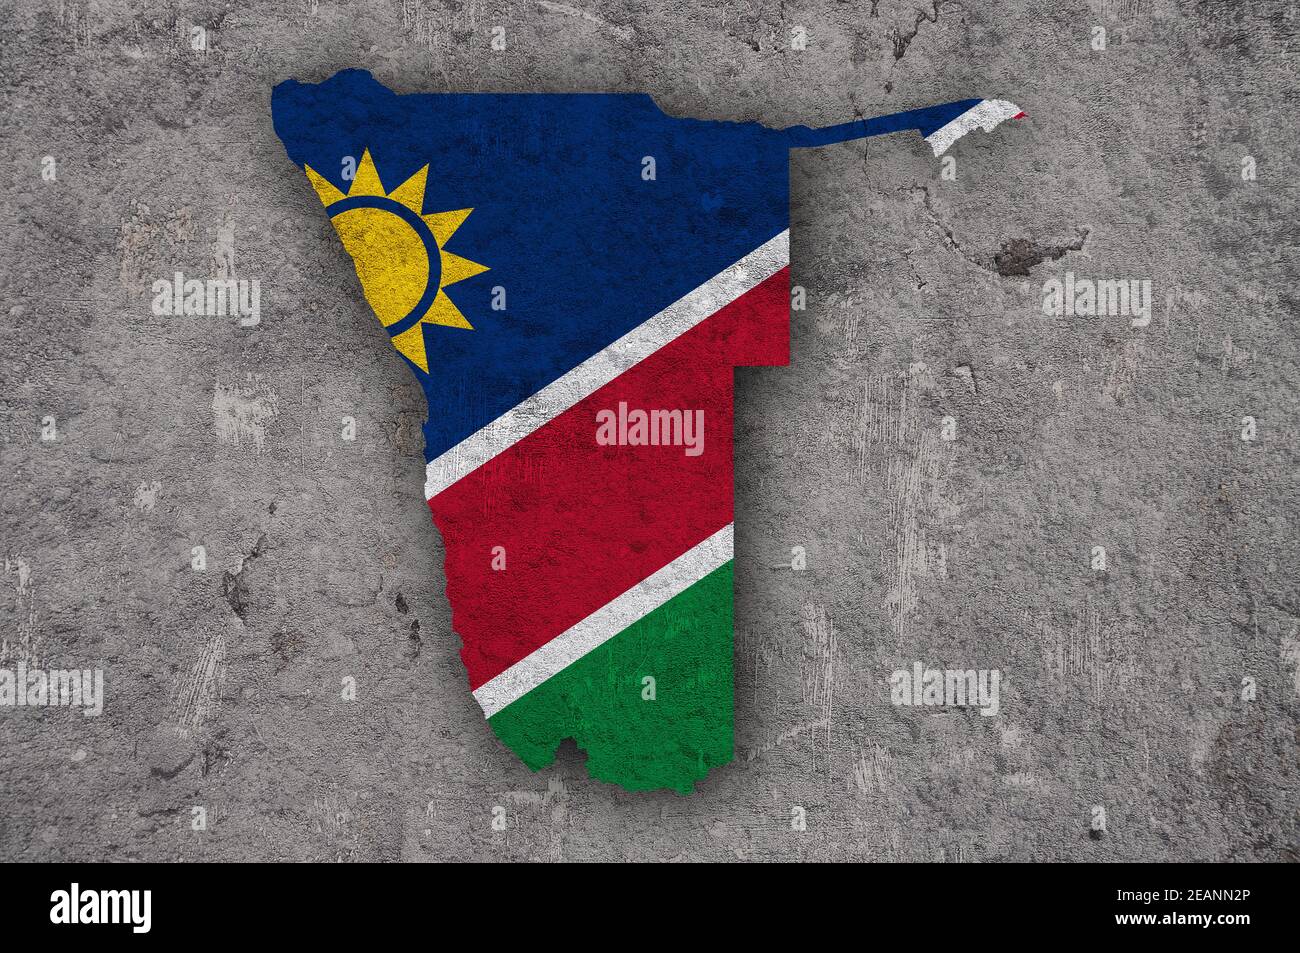 Karte und Flagge Namibias auf verwittertem Beton Stockfoto